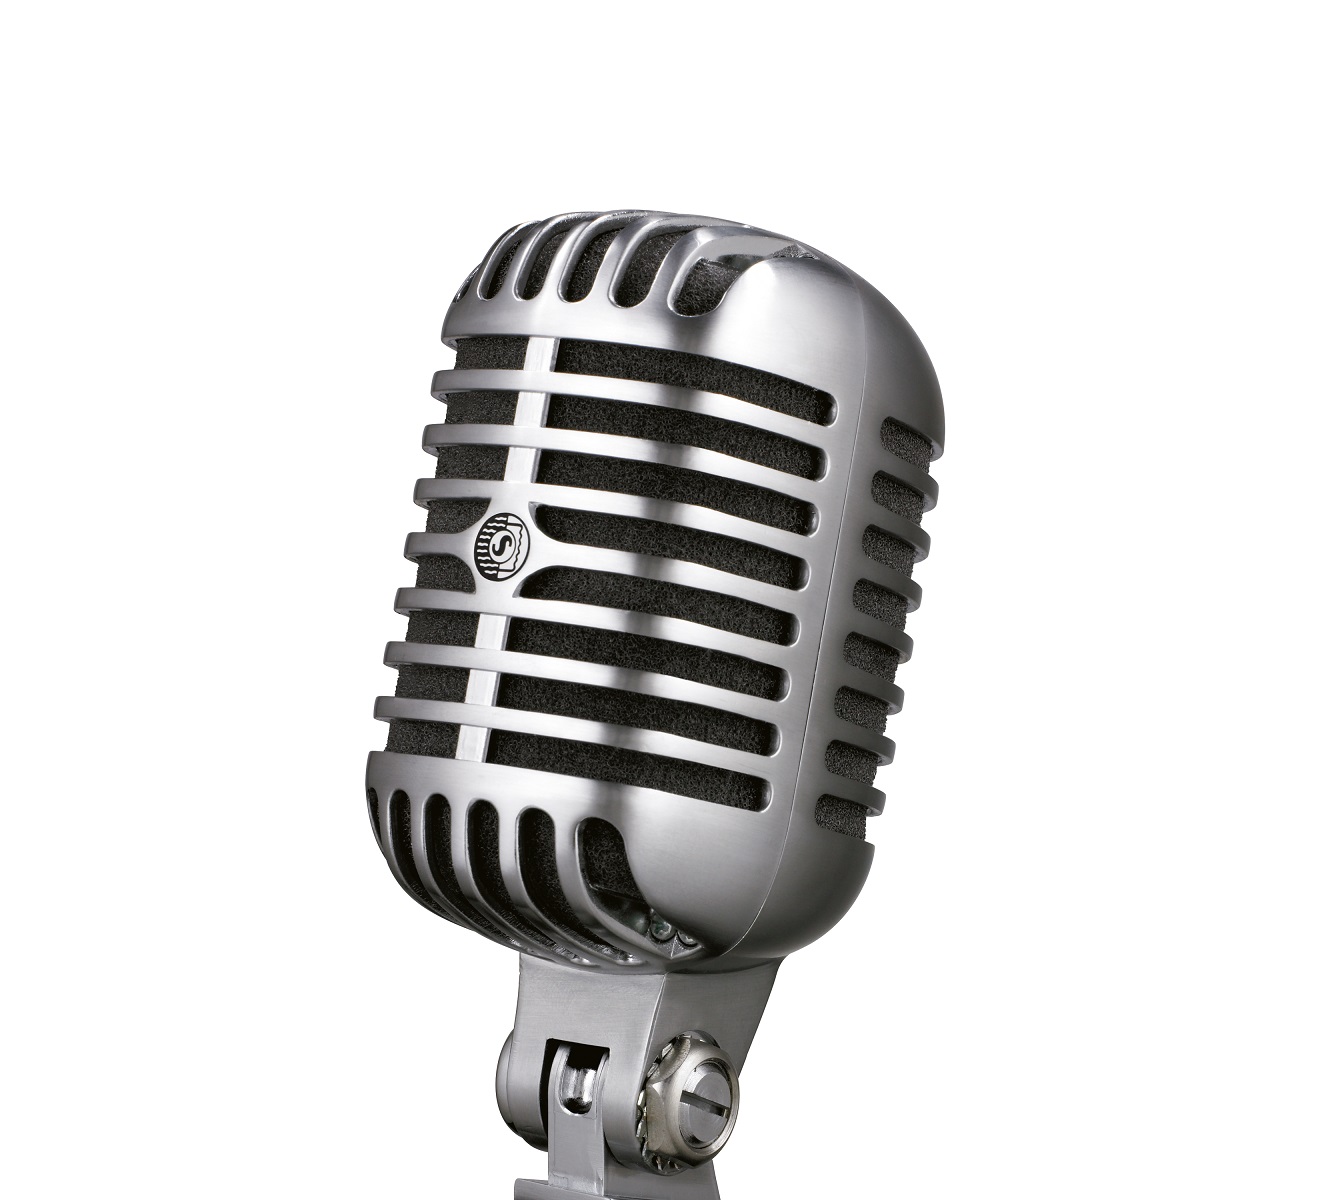 55SH Series II Retro Mikrofon